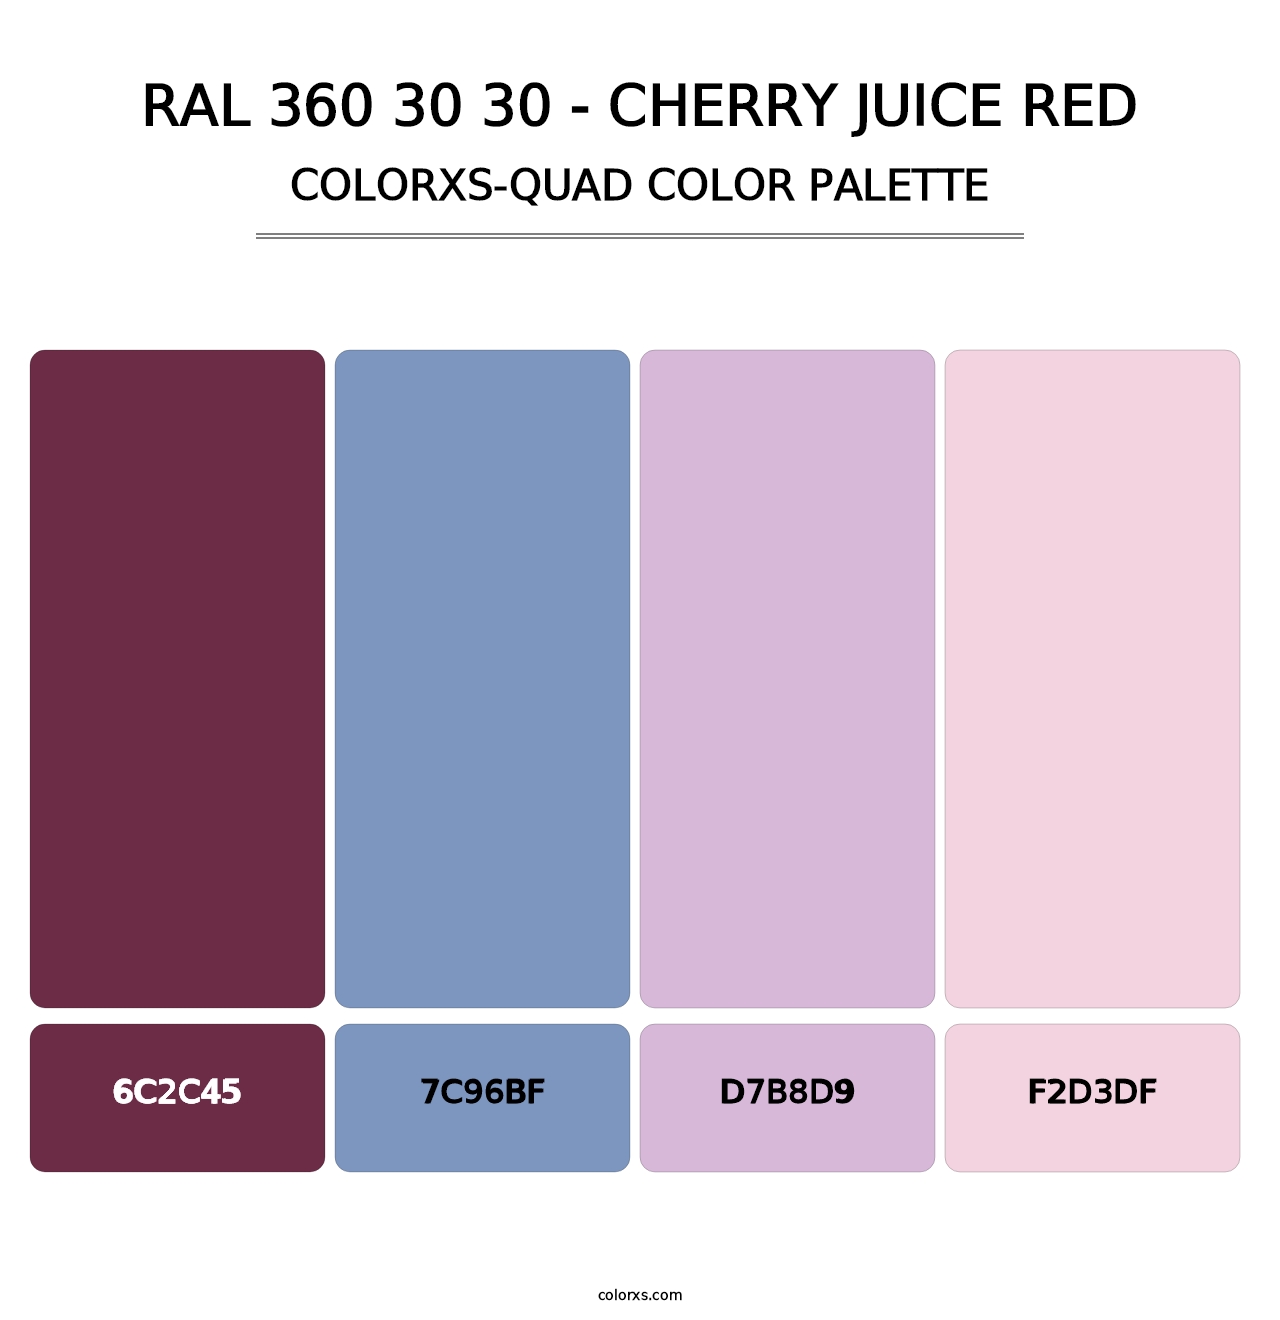 RAL 360 30 30 - Cherry Juice Red - Colorxs Quad Palette